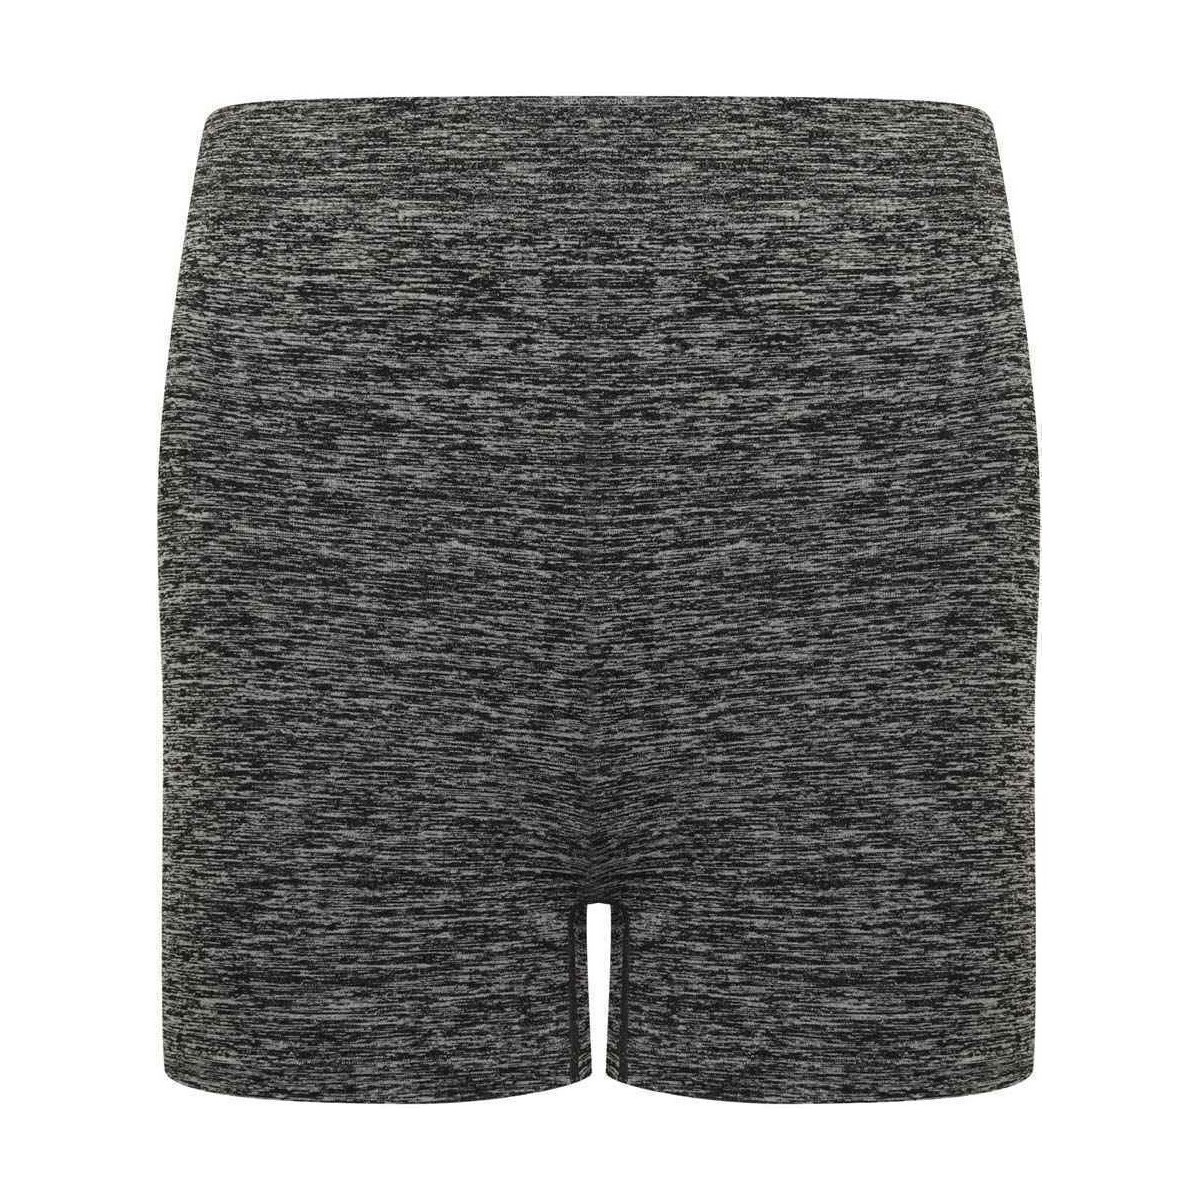 textil Mujer Shorts / Bermudas Tombo TL301 Gris